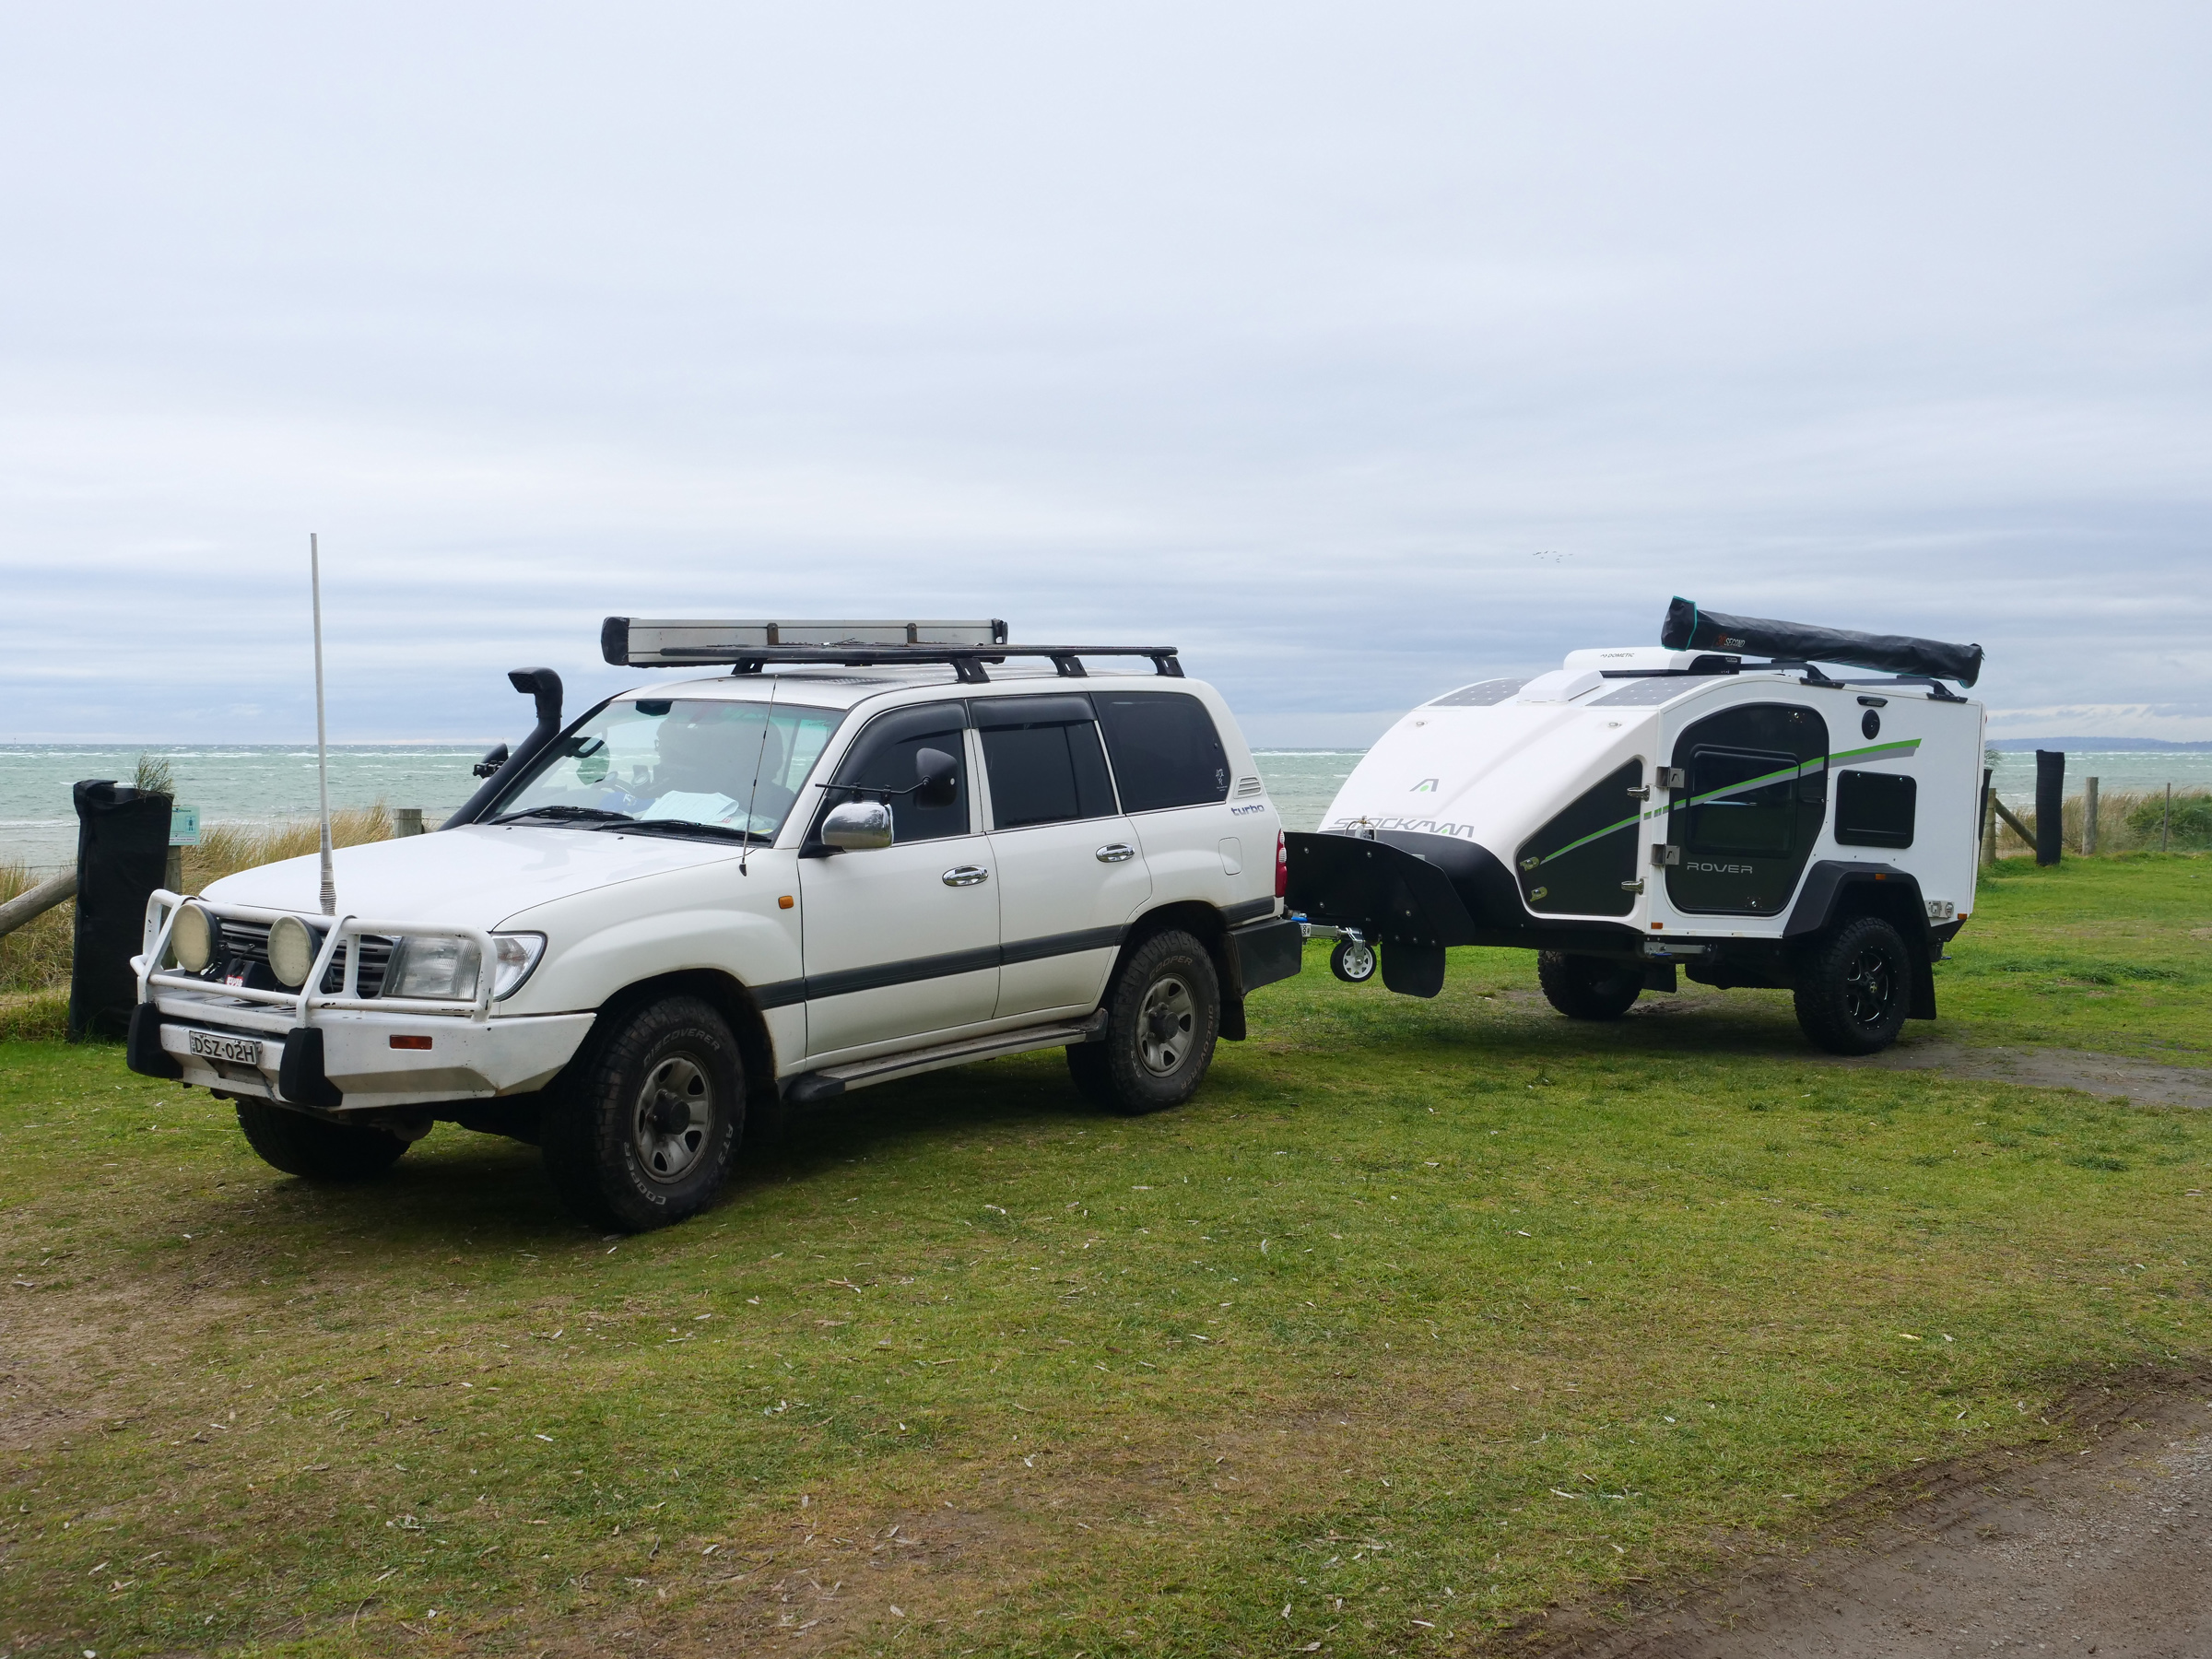 Car and camper trailer